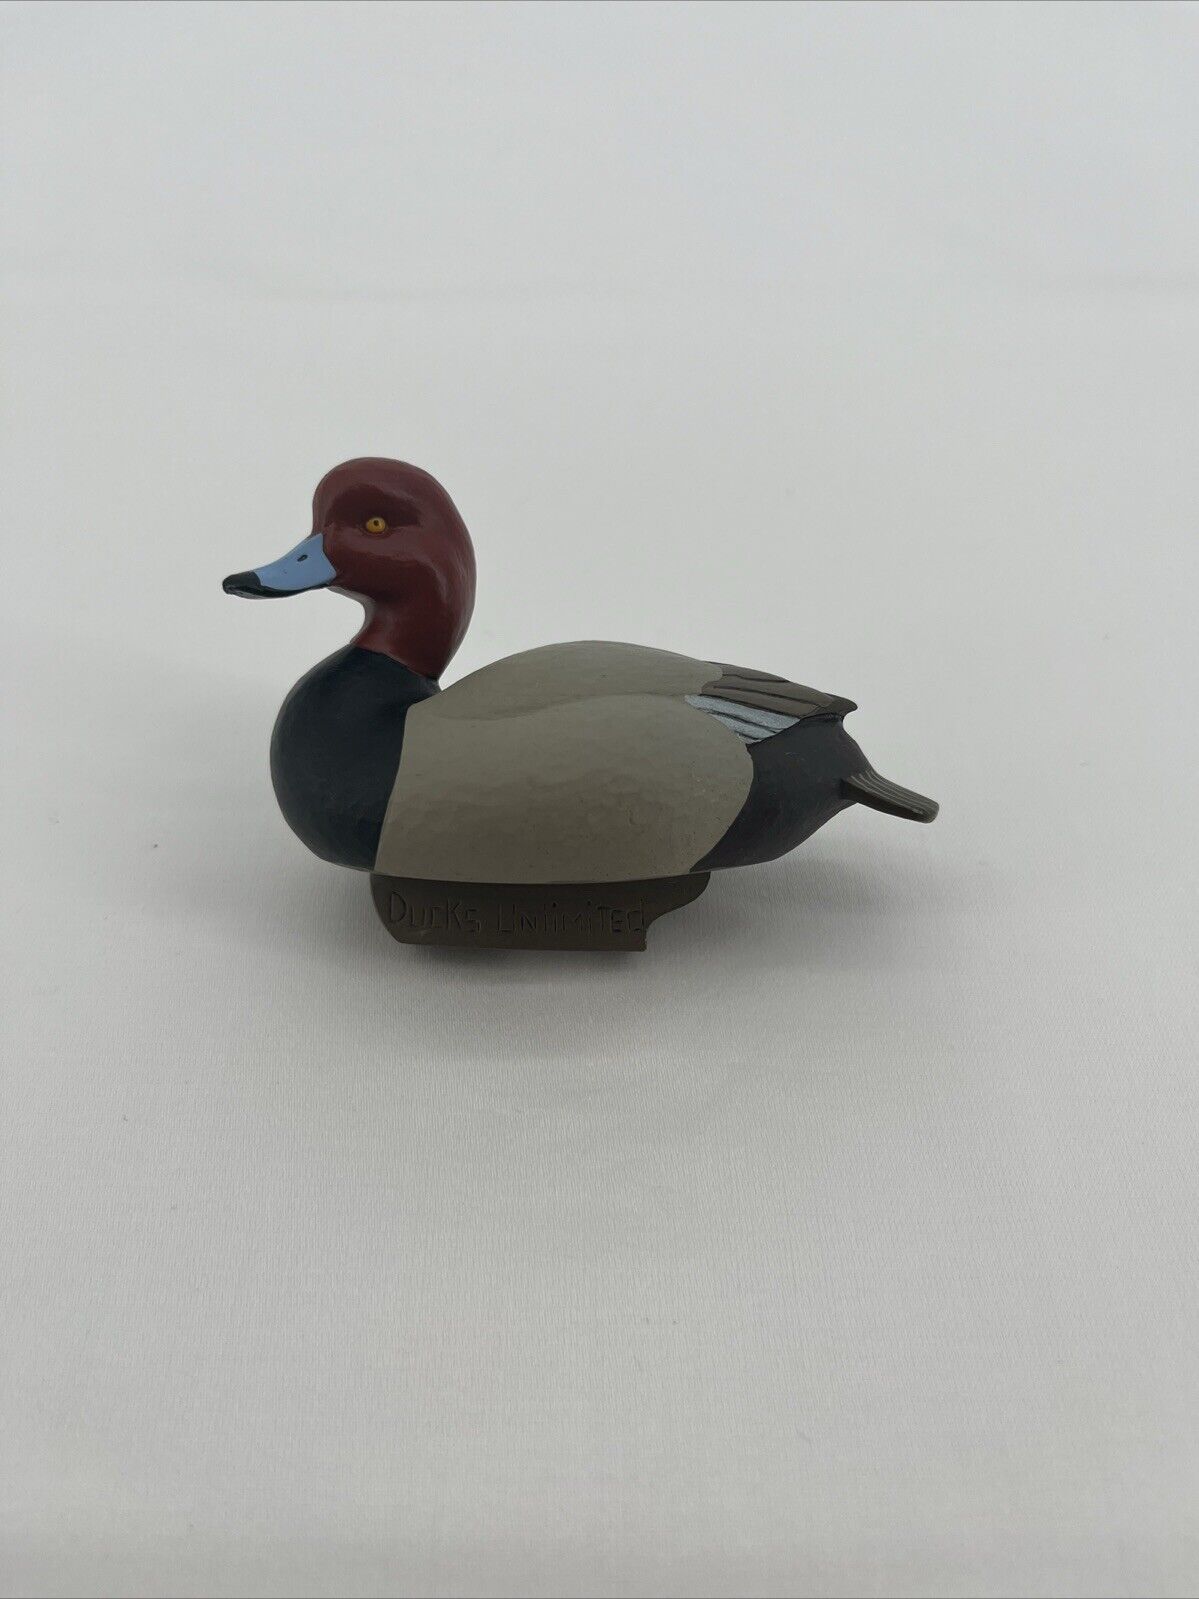 Ducks Unlimited Miniature Duck Jett Brunet 2012